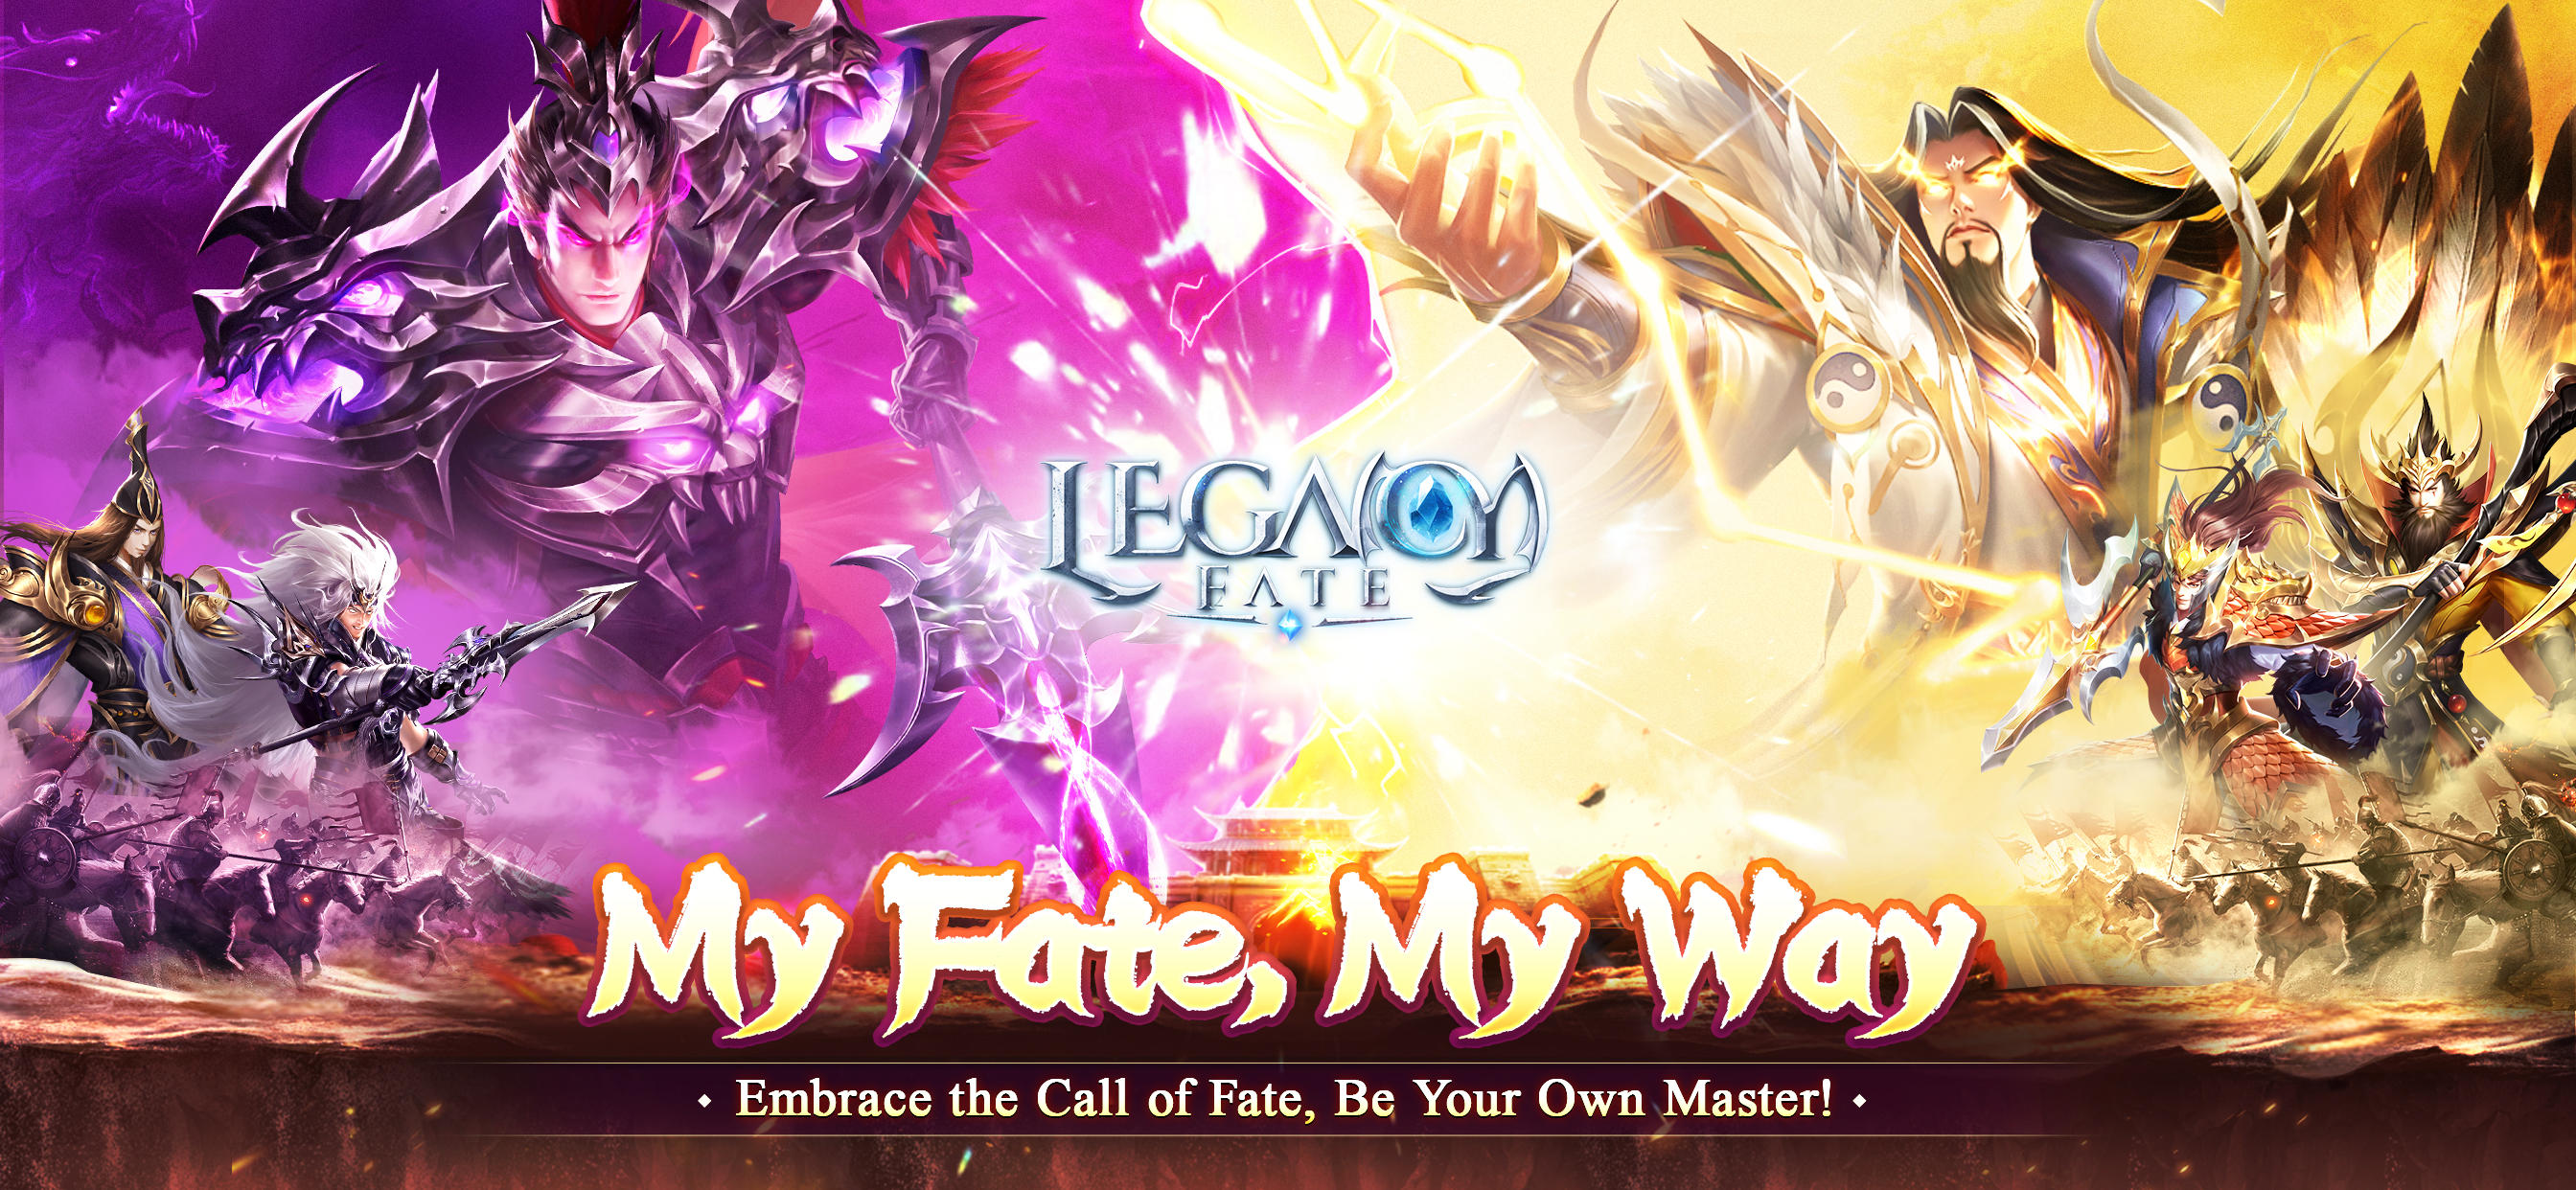 Screenshot 1 of Legacy Fate: ศักดิ์สิทธิ์และกล้าหาญ 1.1.5